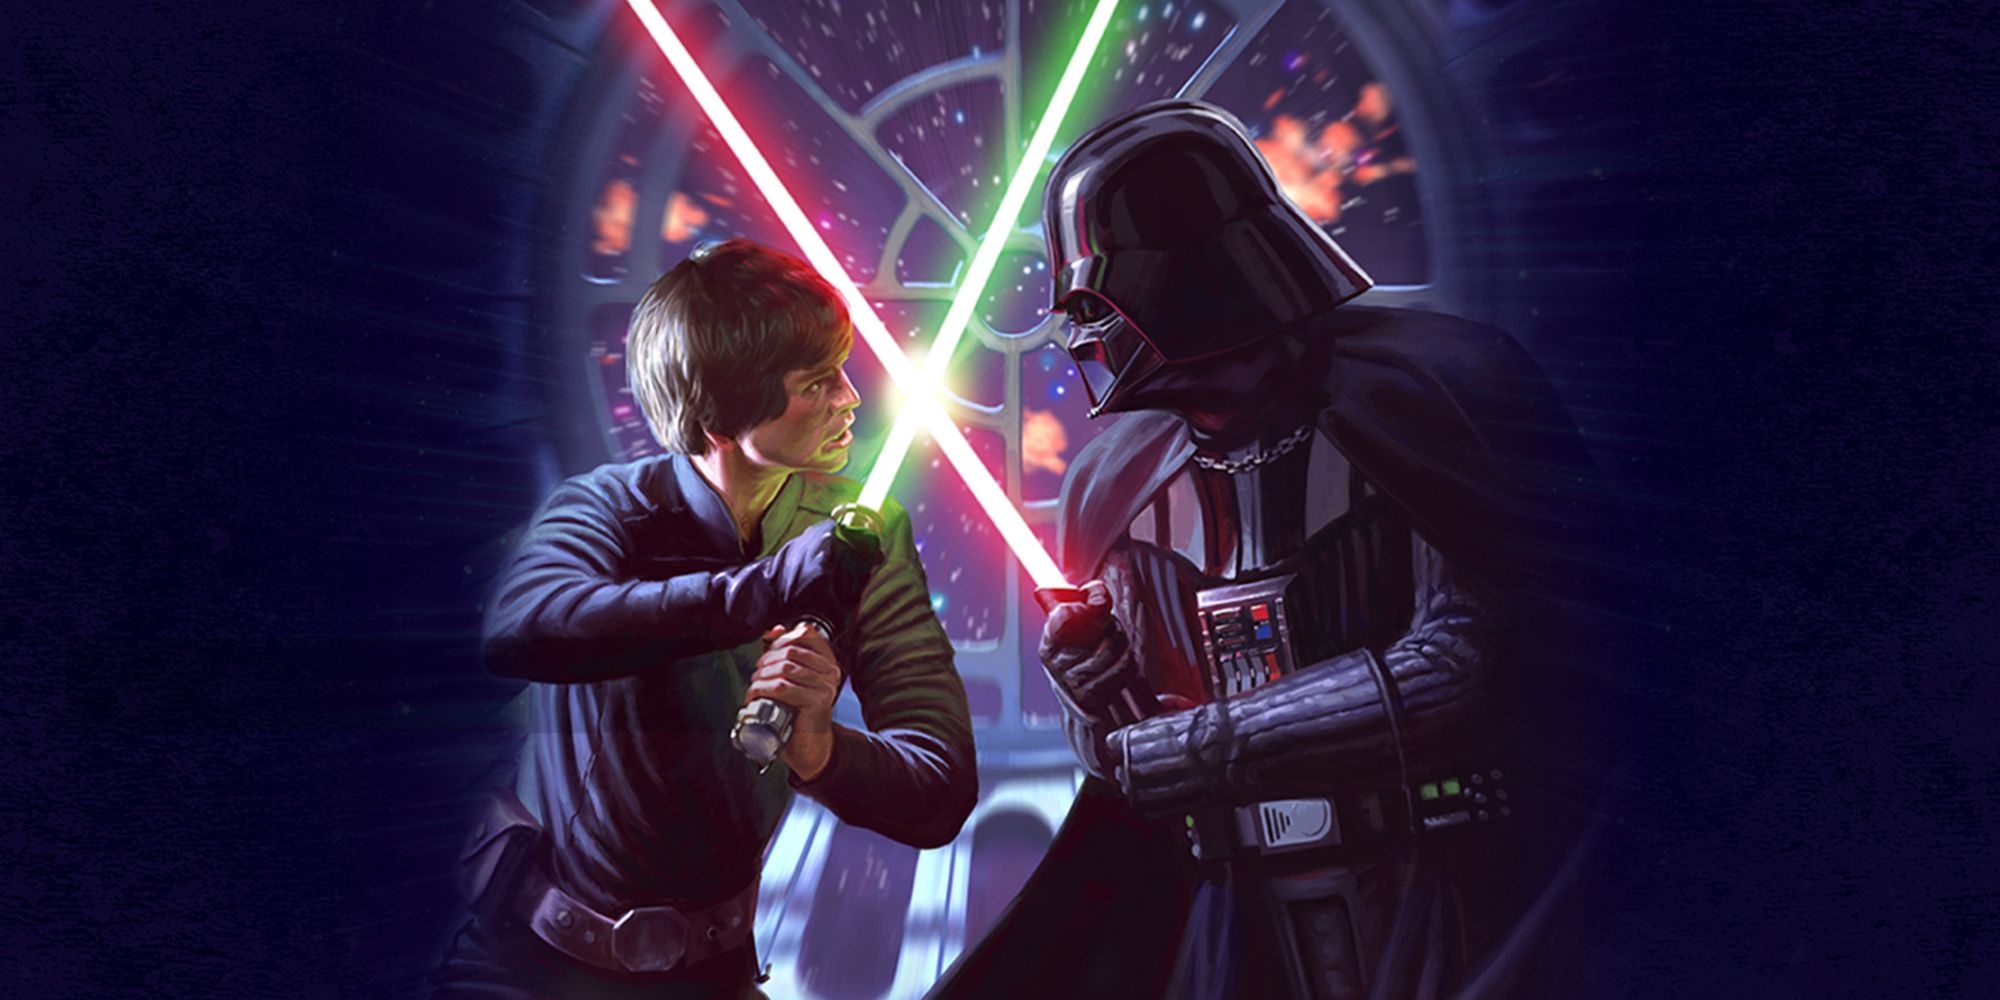 Luke fighting Darth Vader in the artwork for the Star Wars Deckbuilding Game